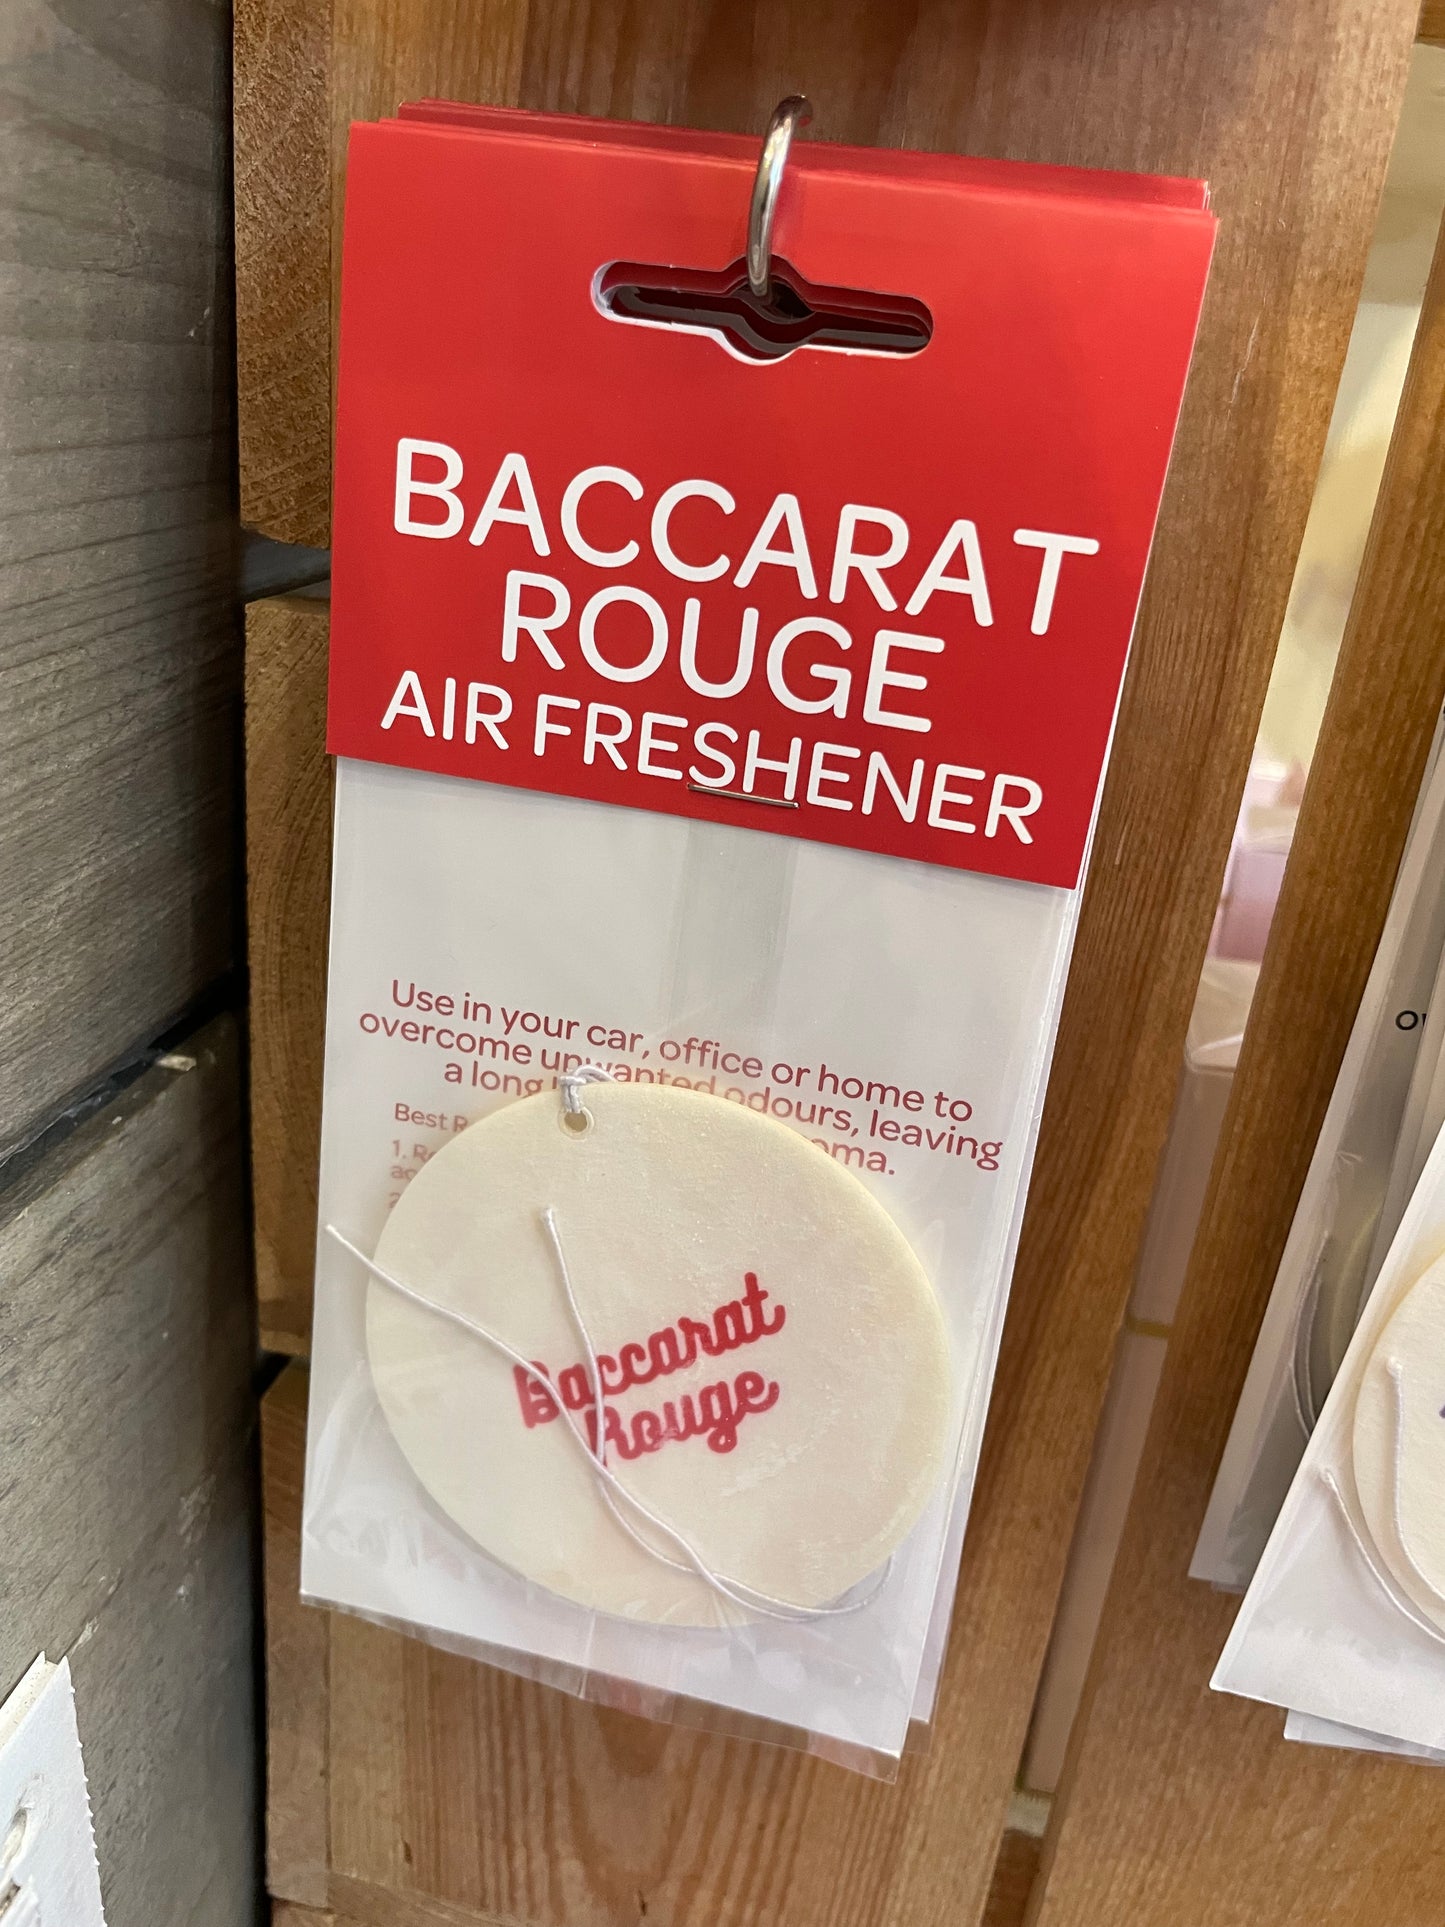 Car / Home Air Freshener